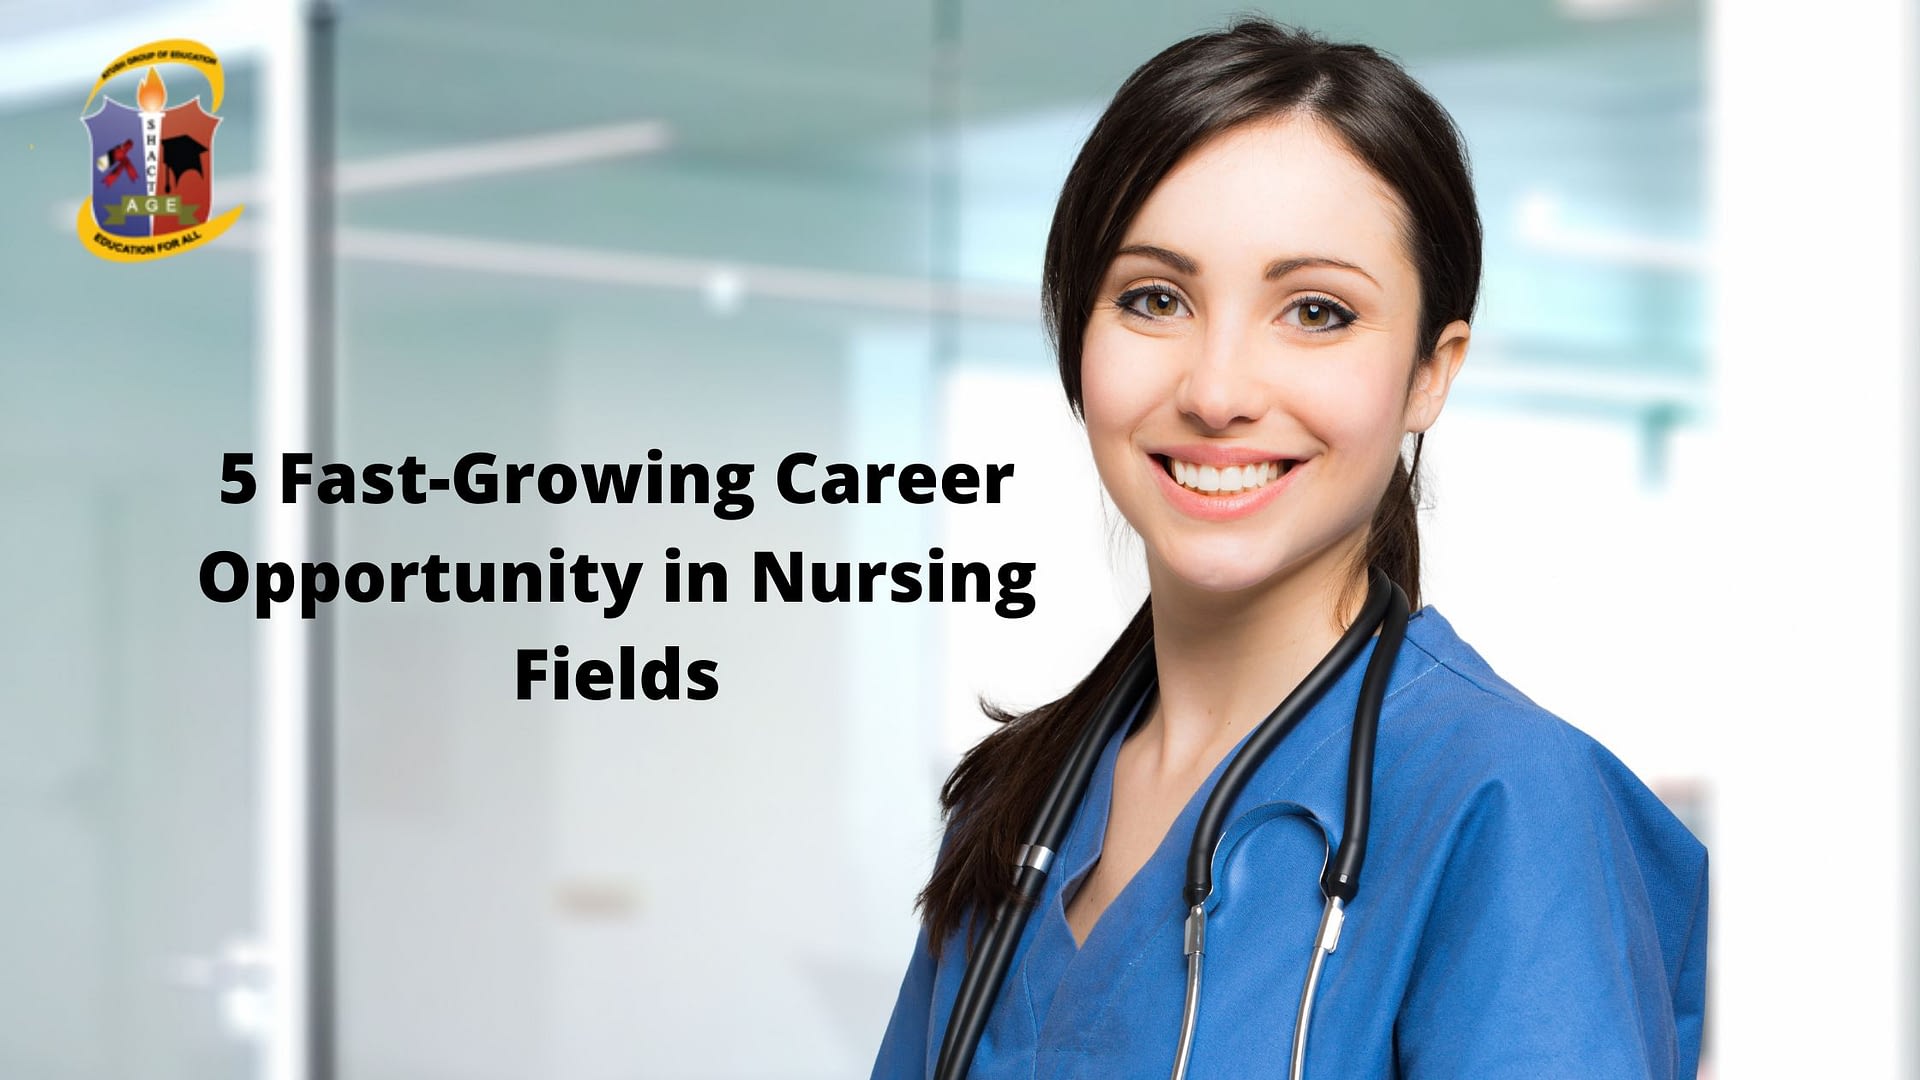 5 Fast-Growing Career Opportunity in Nursing